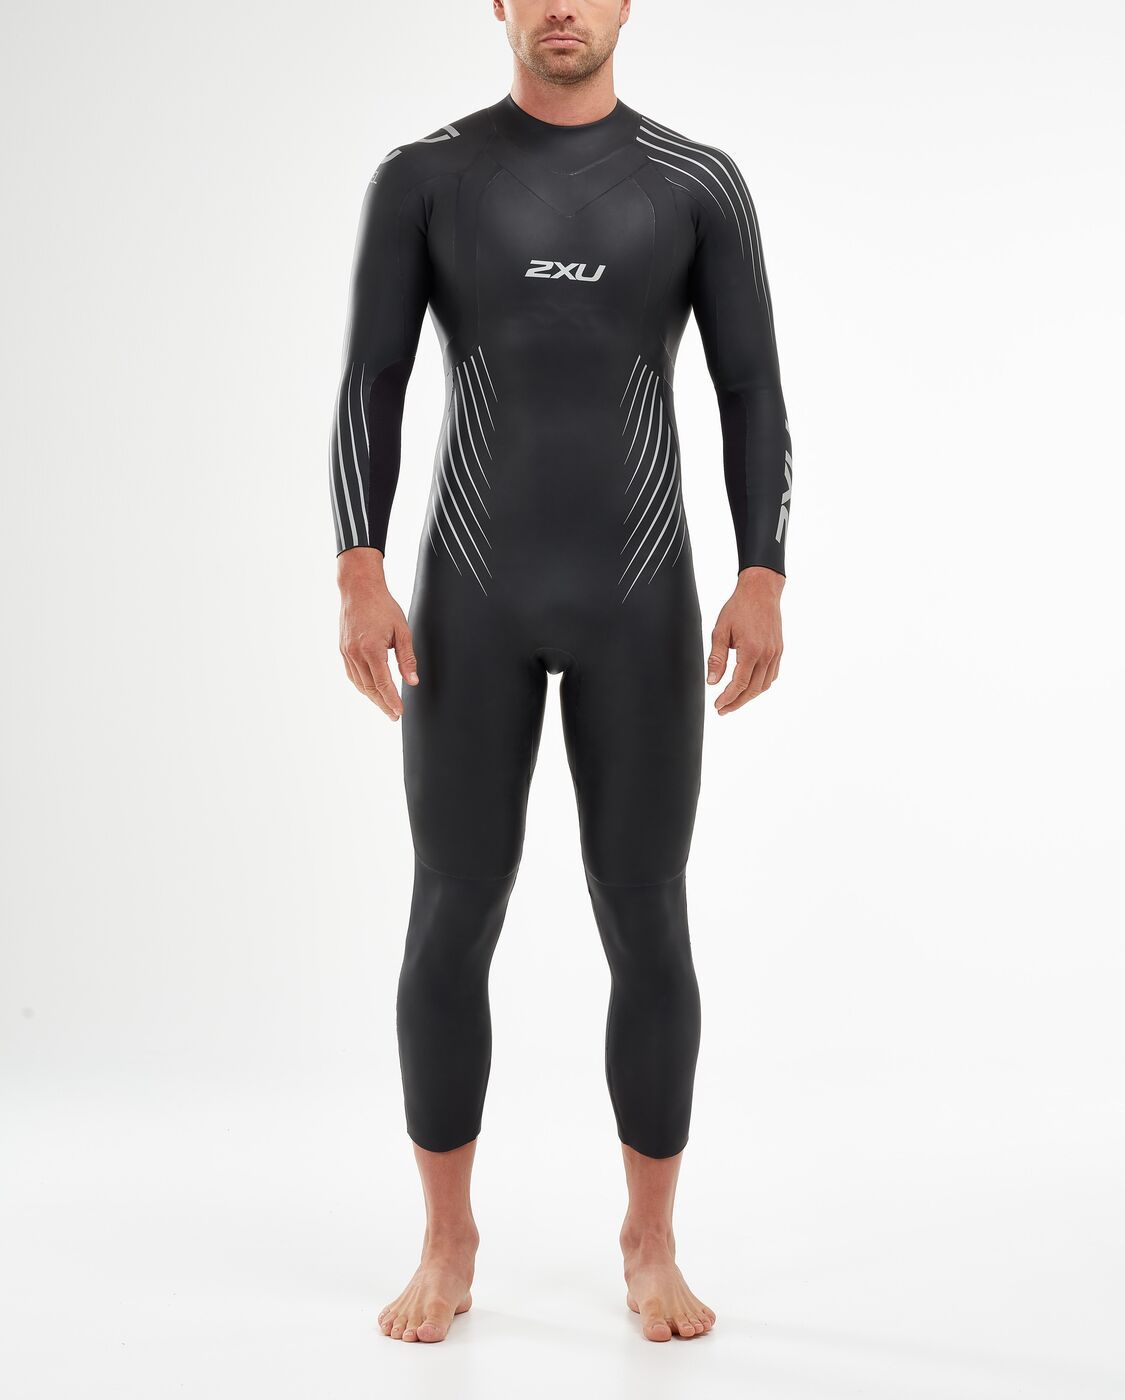 2XU South Africa - Men's Propel:1 Wetsuit - Black/Silver Shadow